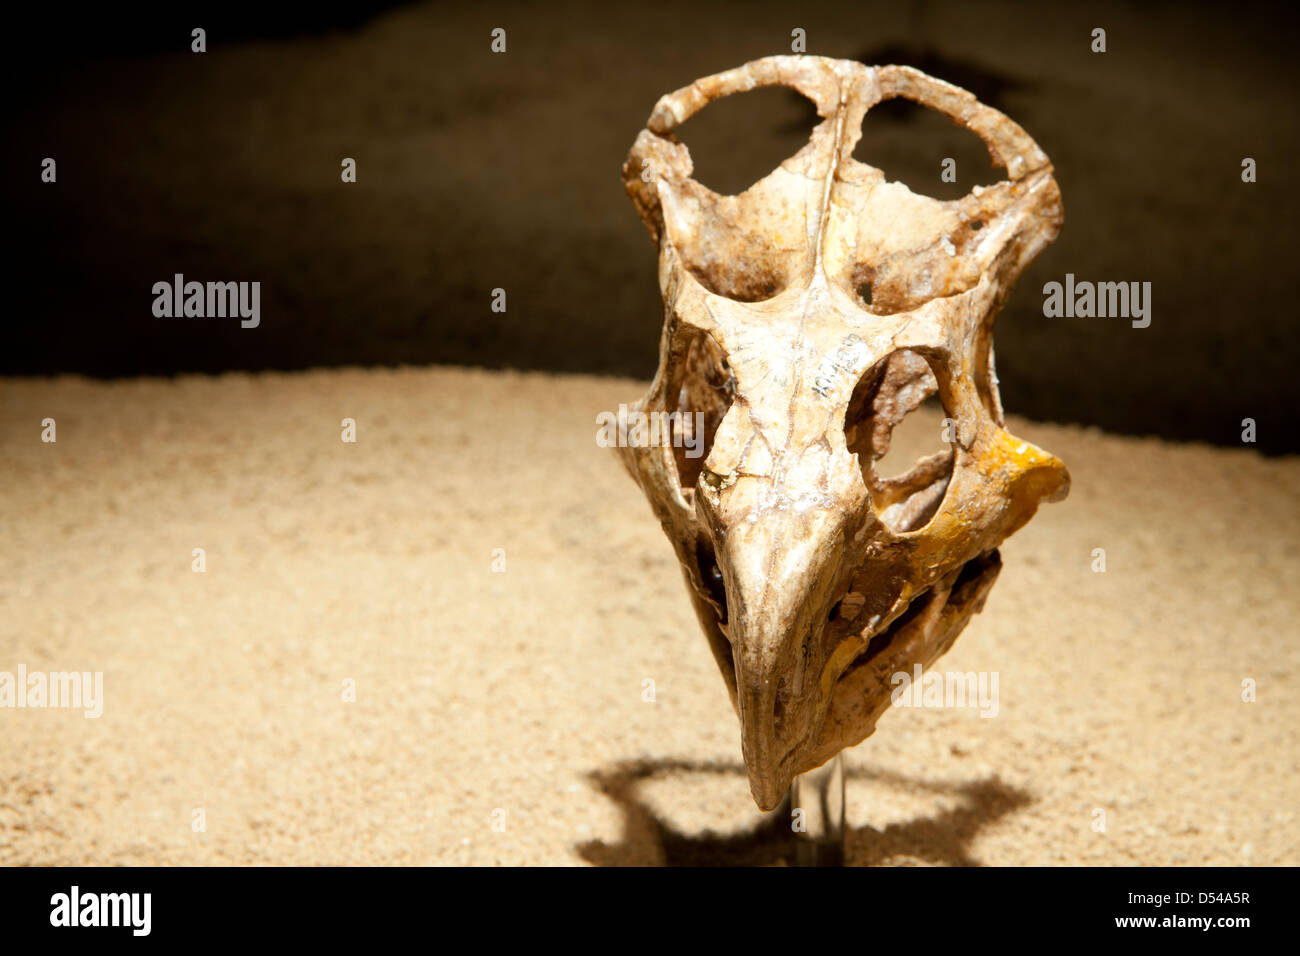 Skull of young Protoceratops, Exposition of Dinosaurs from Gobi desert in Mongolia. Cosmocaixa museum, Barcelona, Spain Stock Photo